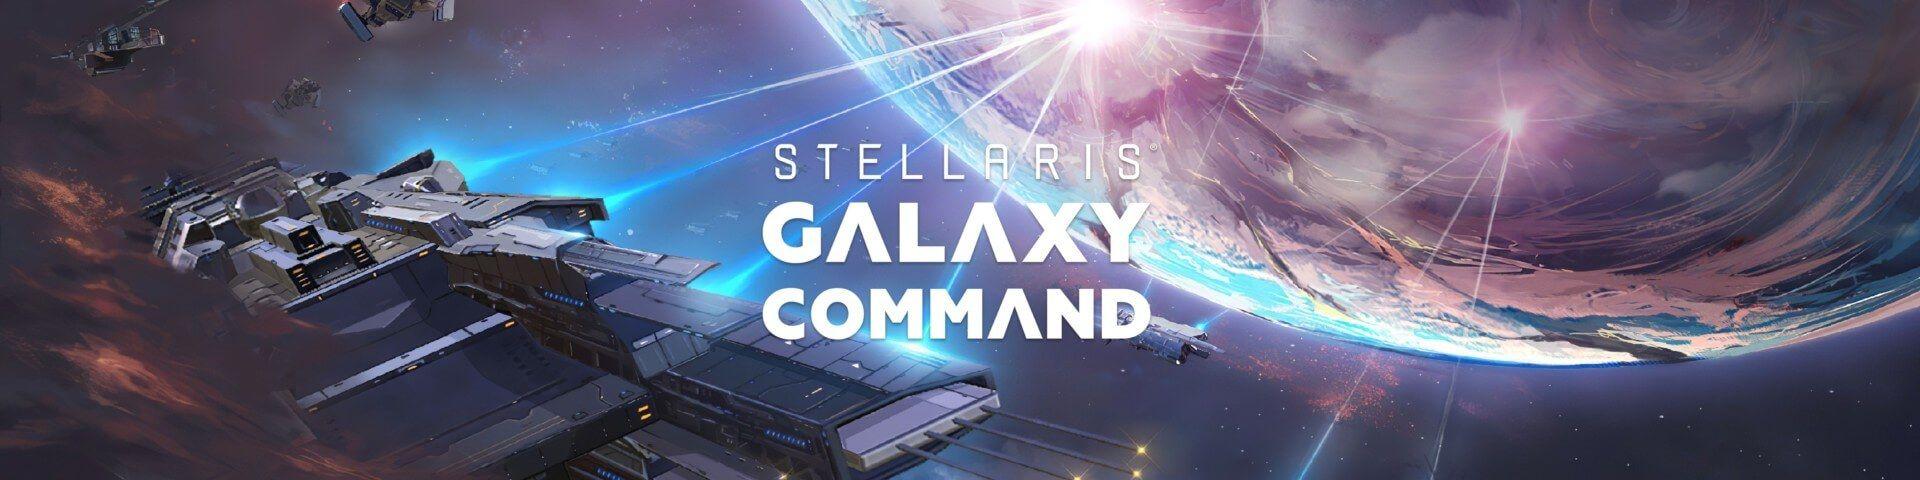 Stellaris Galaxy Command Art